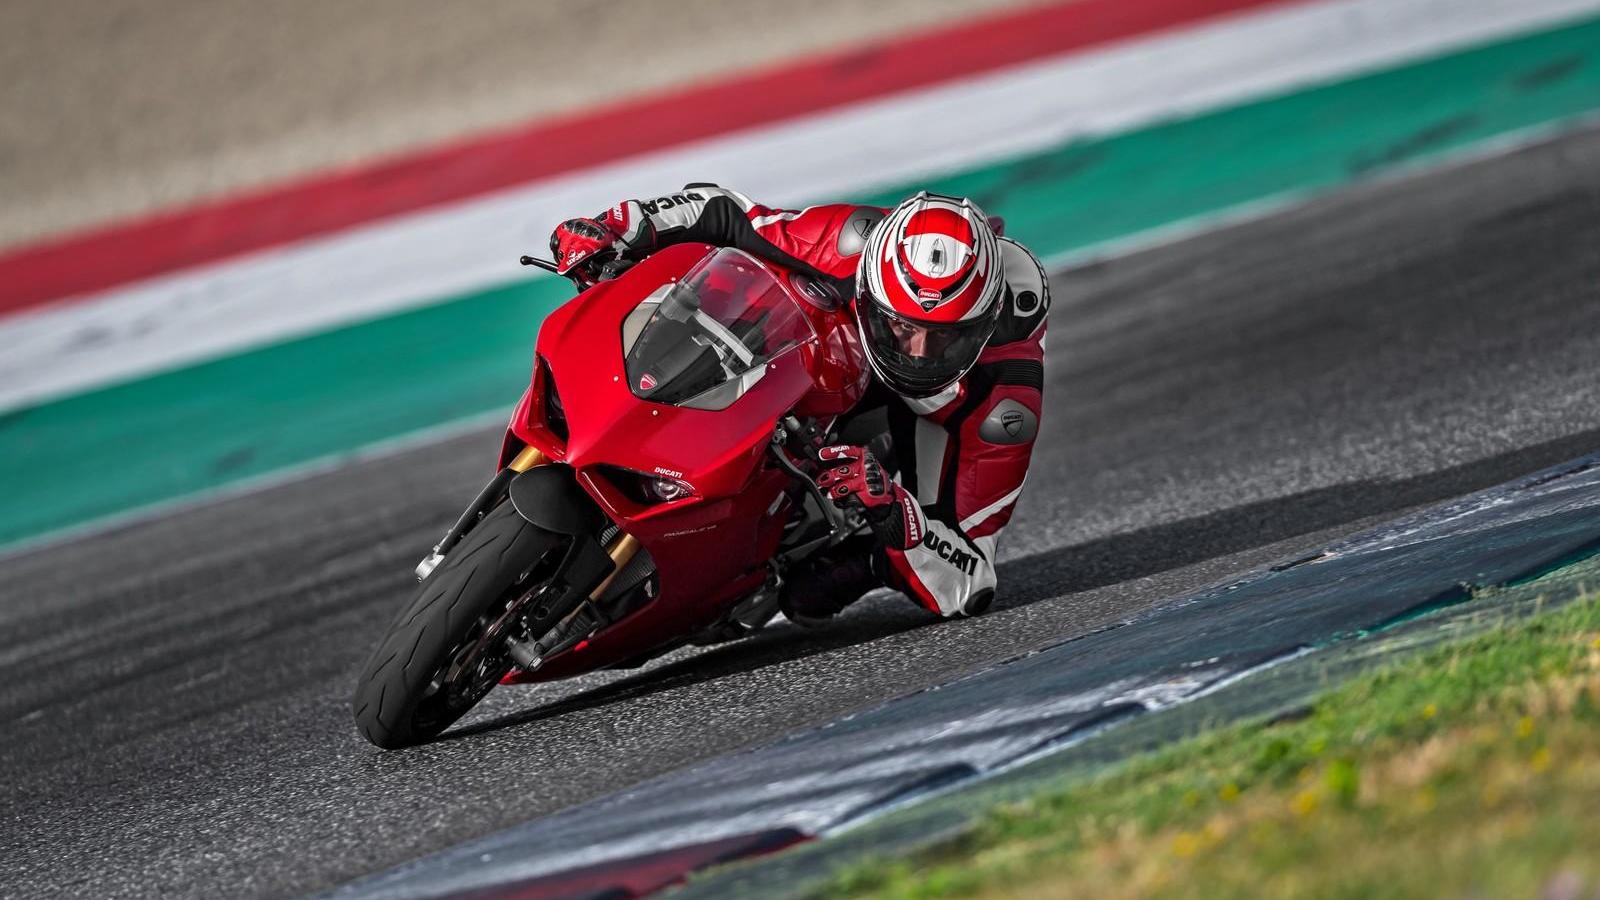 2019 Ducati Panigale V4 Picture, Photo, Wallpaper